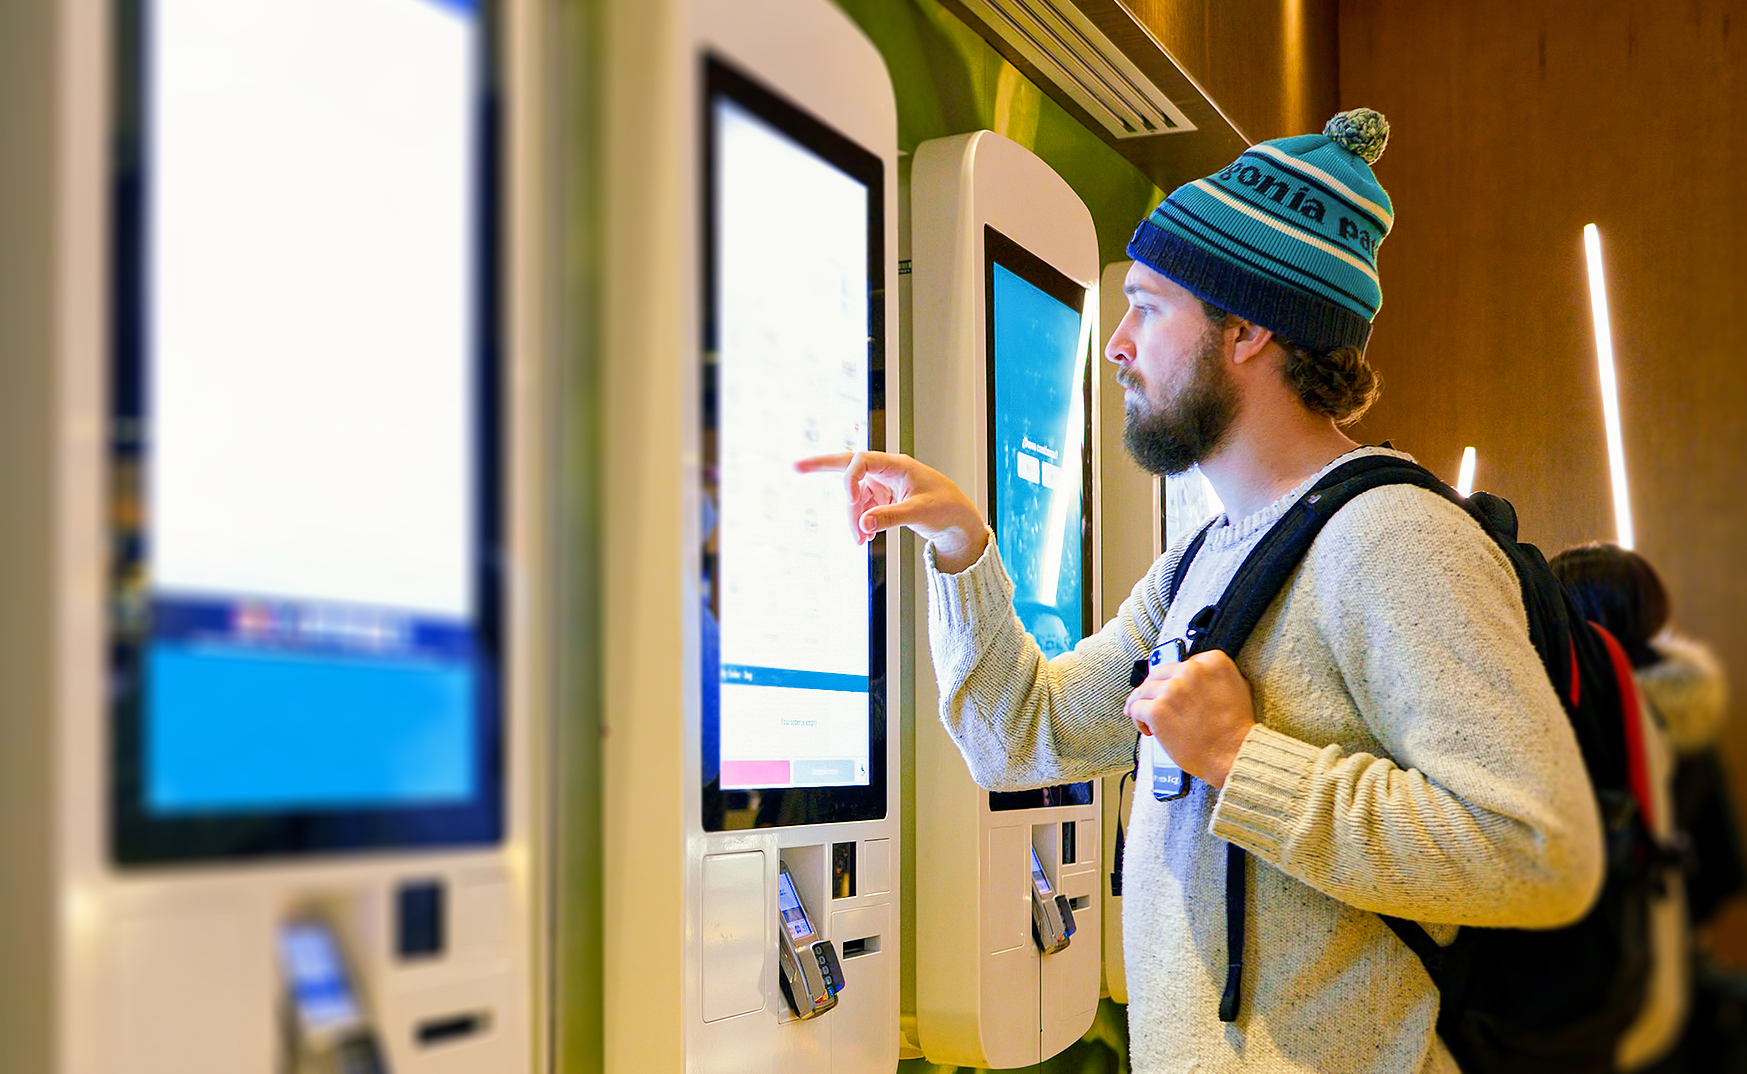 A man uses a touchscreen kiosk to retrieve information